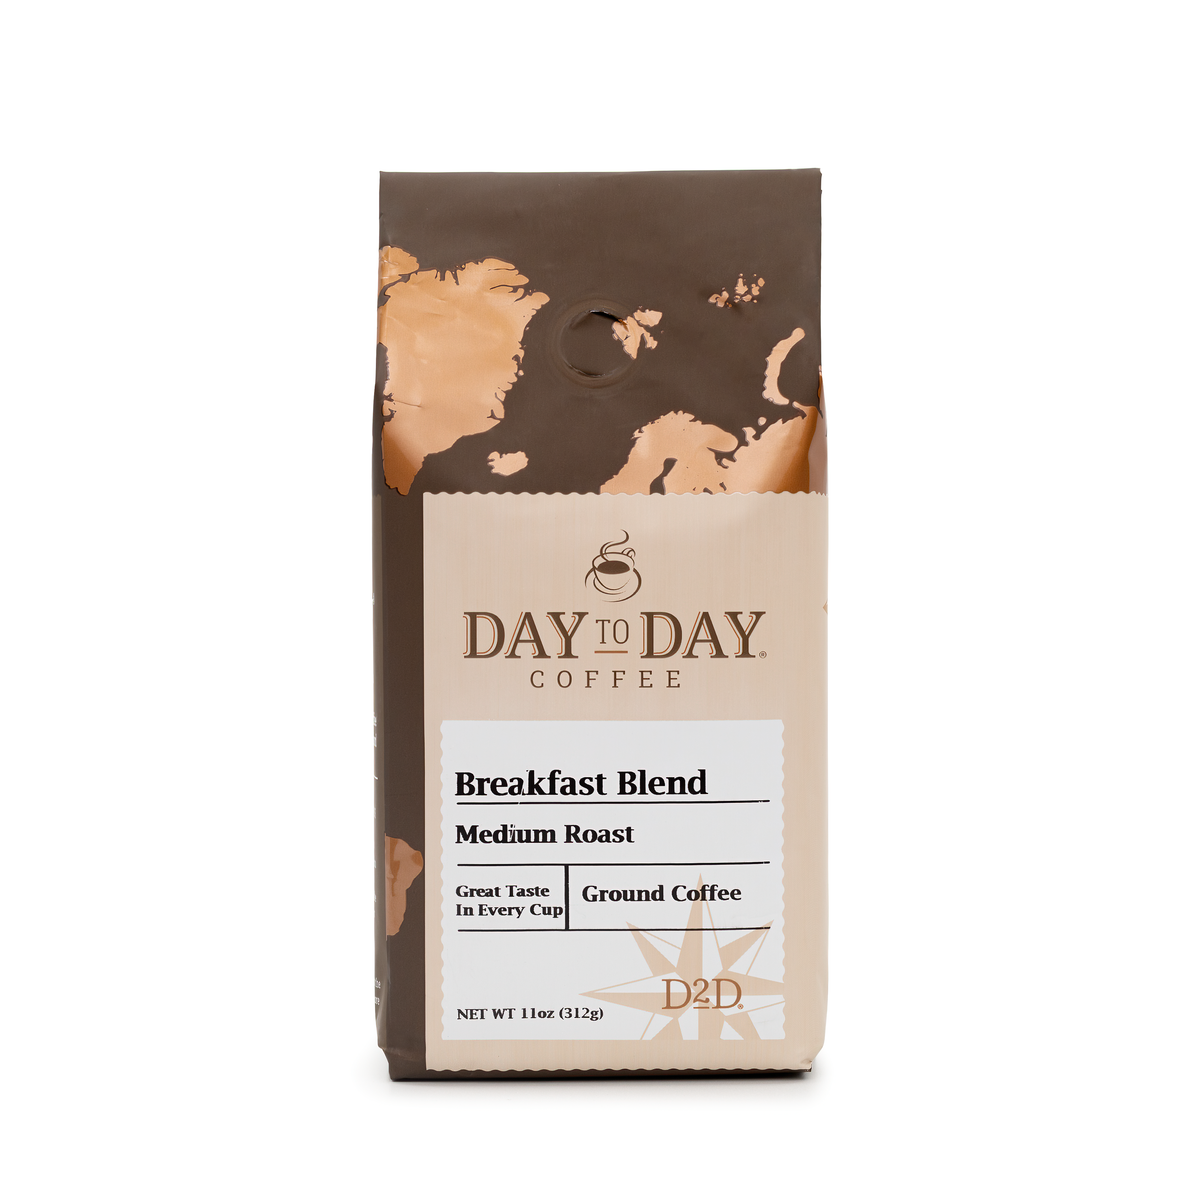 Day to day coffee 11oz breakfast blend medium roast ground coffee - 1